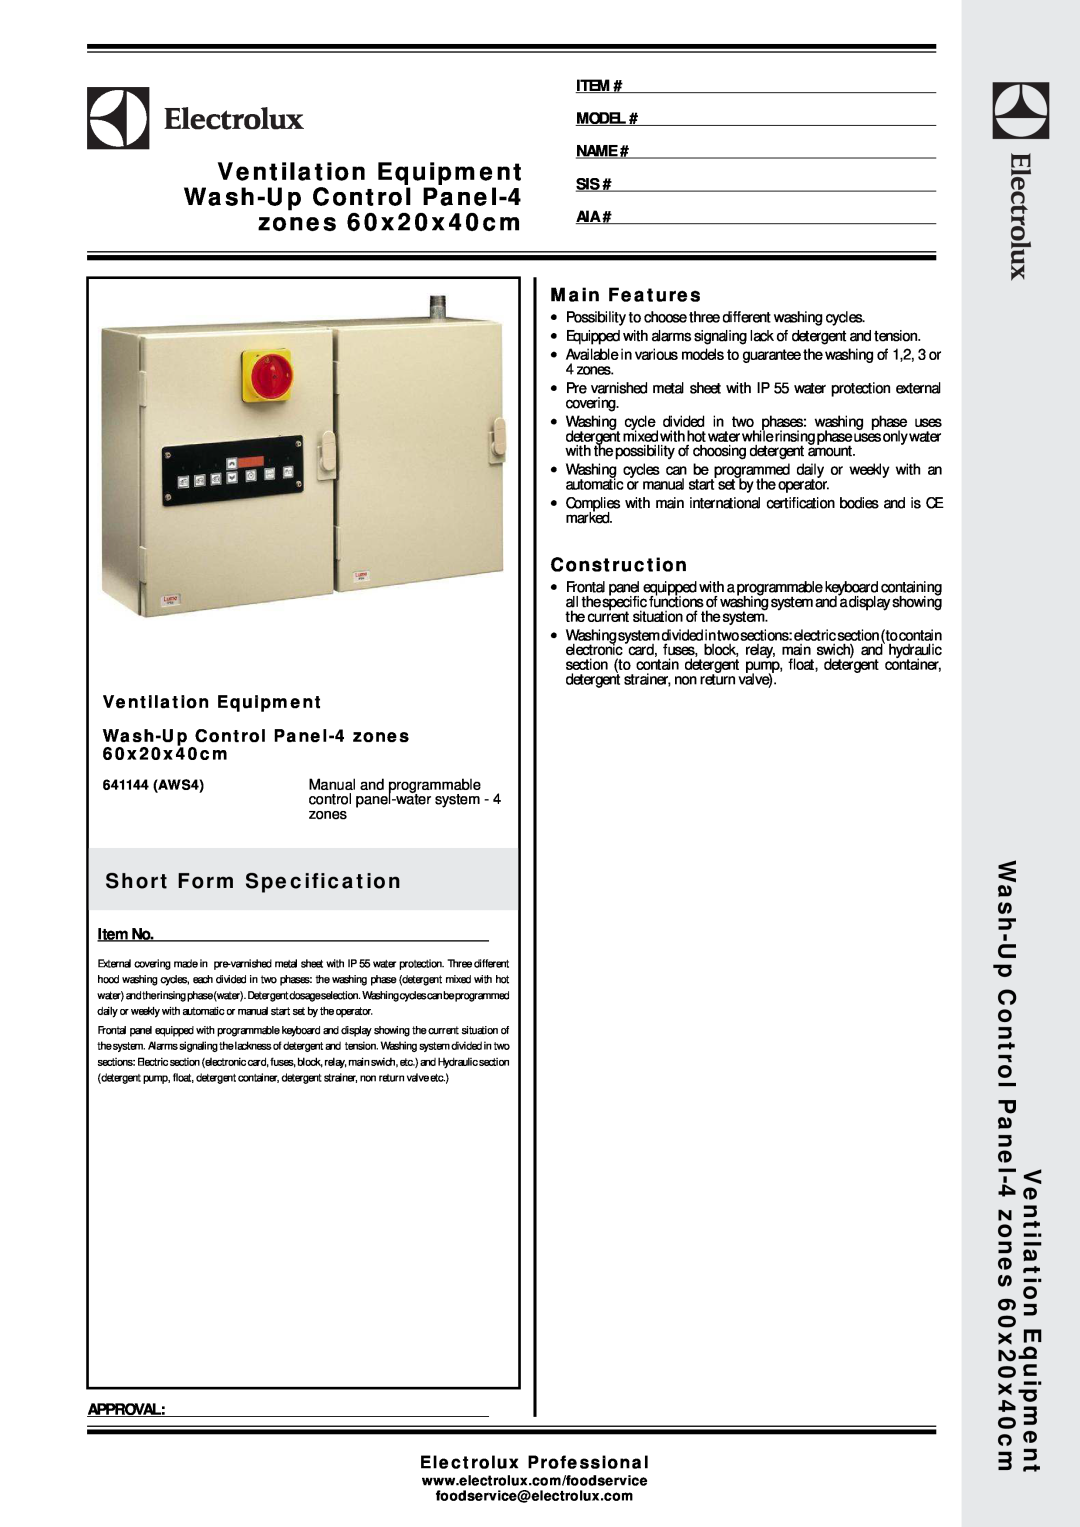 Electrolux 641144 (AWS4) manual Ventilation Equipment, Wash-Up Control Panel-4, zones 60x20x40cm, Item #, Model #, Name # 